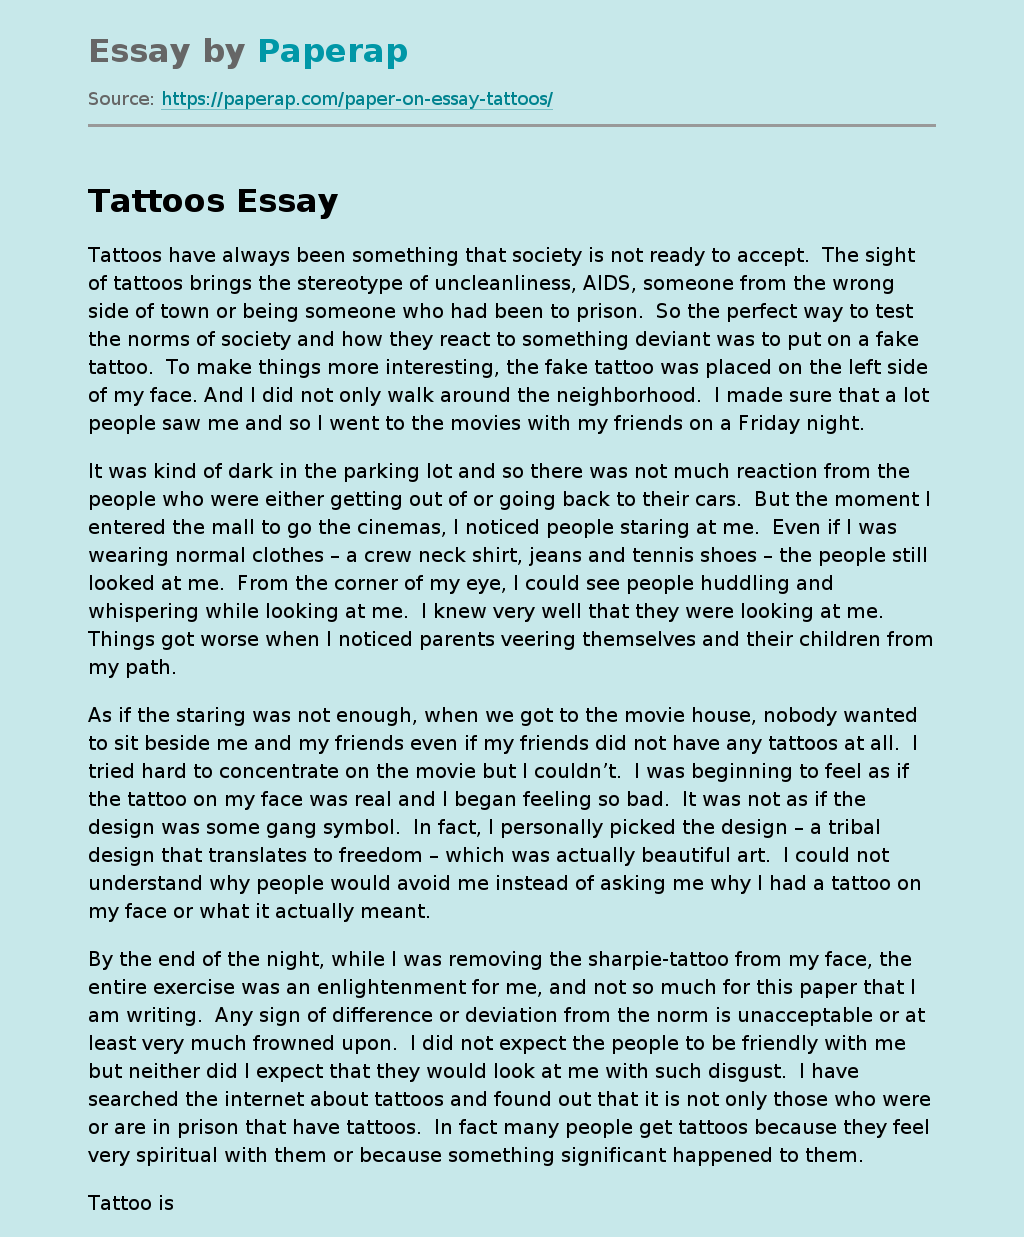 My Fake Tattoo: A Temporary Experiment